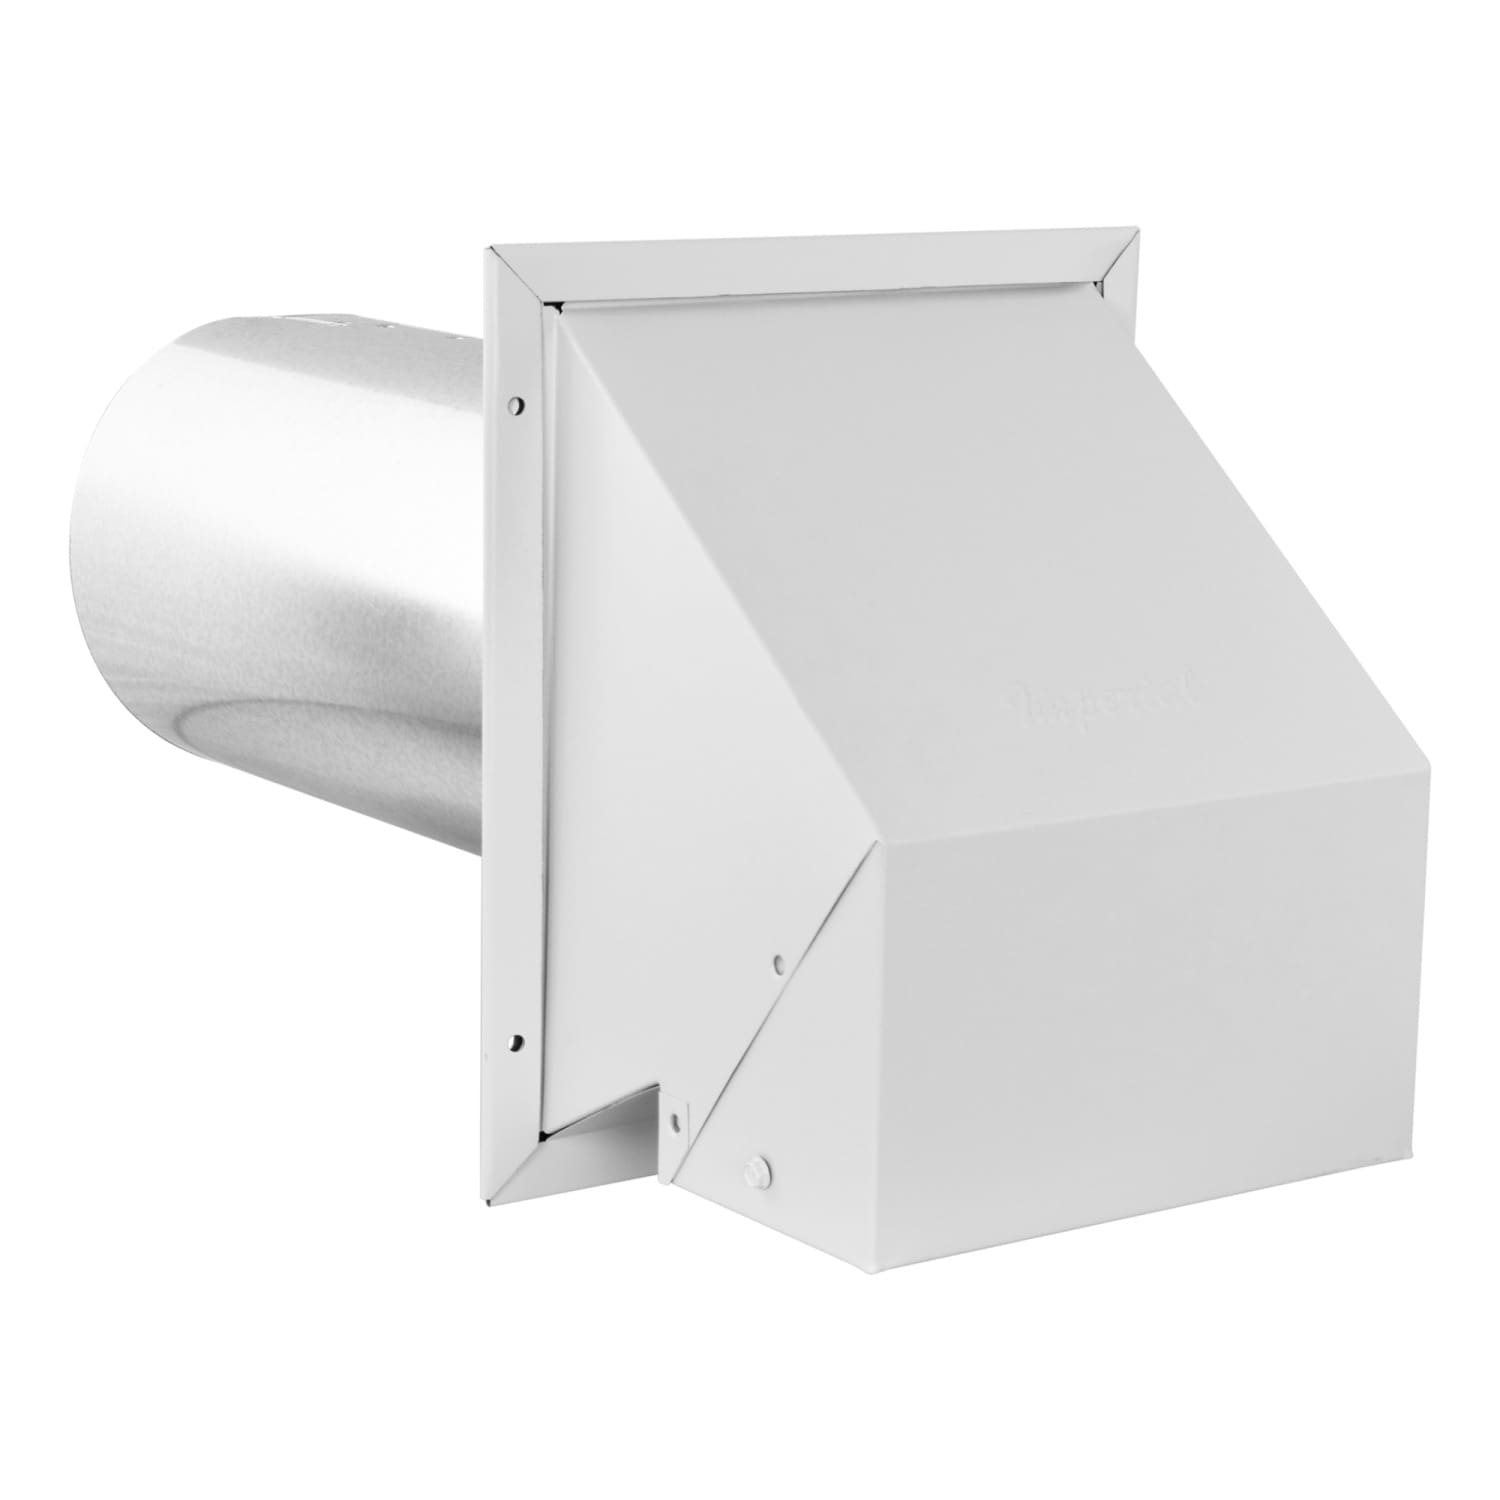 6-In Roof Cap-Kit Black Duct Dryer Bathroom Range-Hood Exhaust Fan Damper Screen 